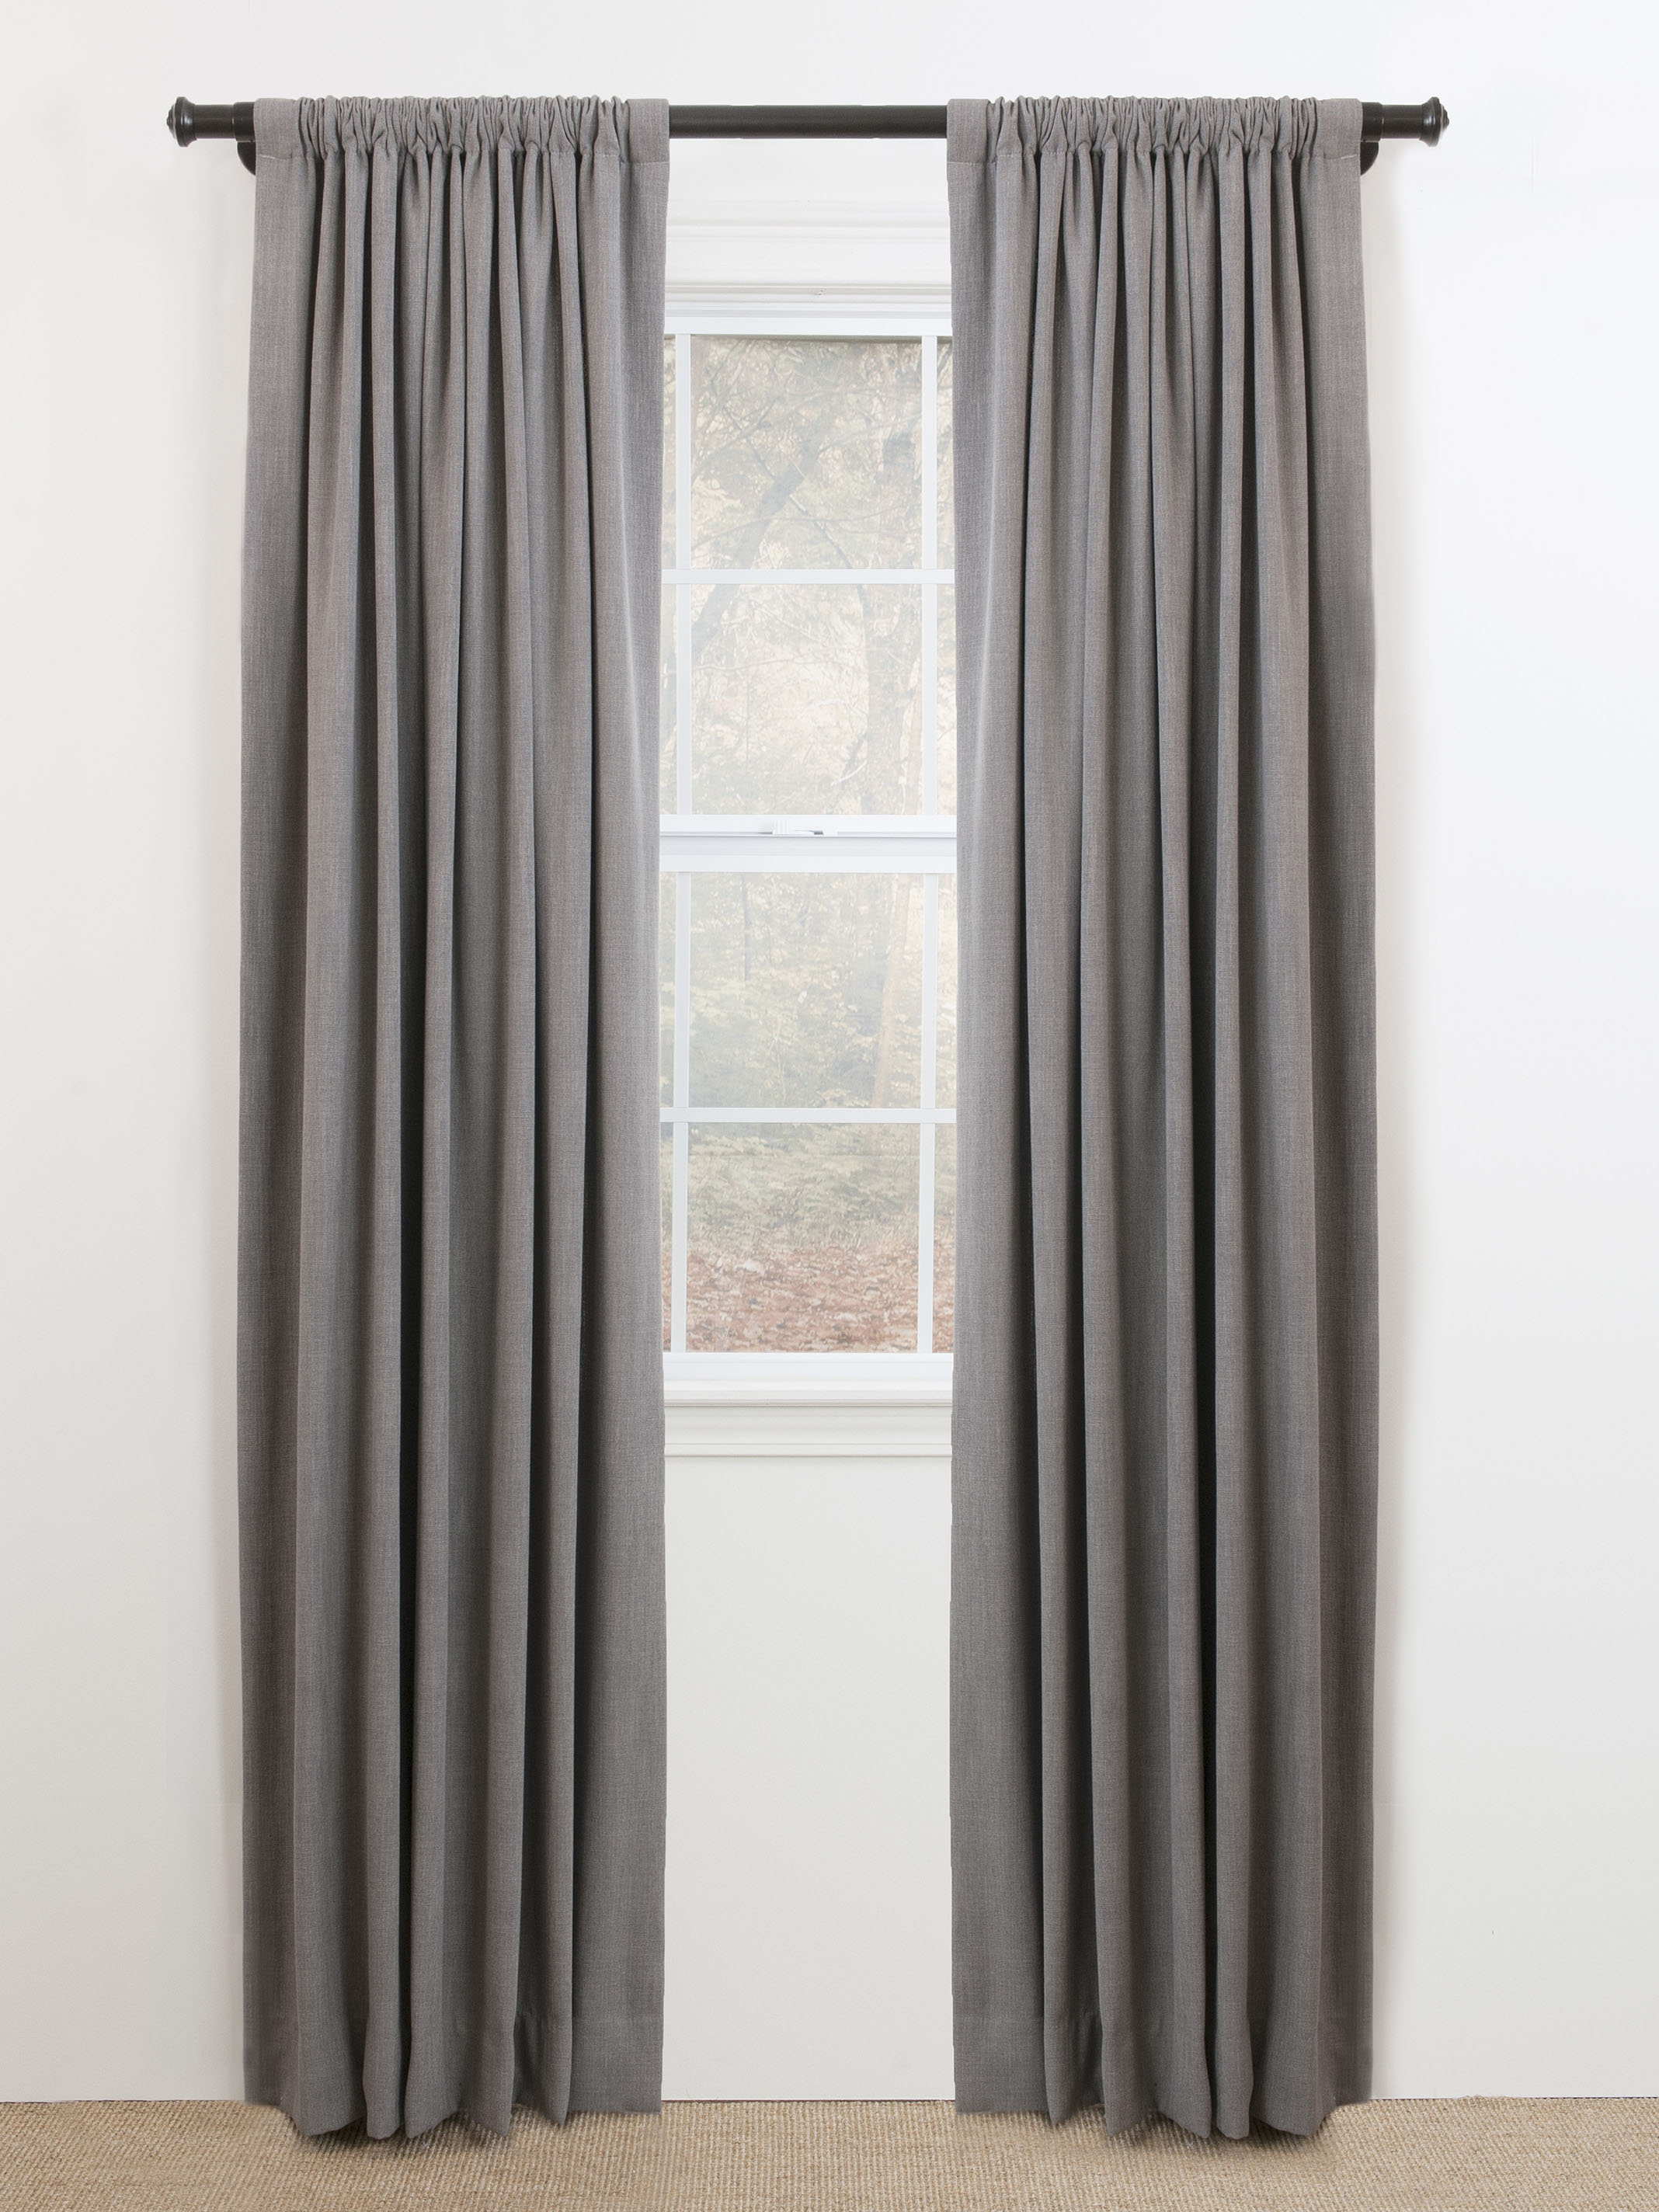 rod pocket drapes for window treatment